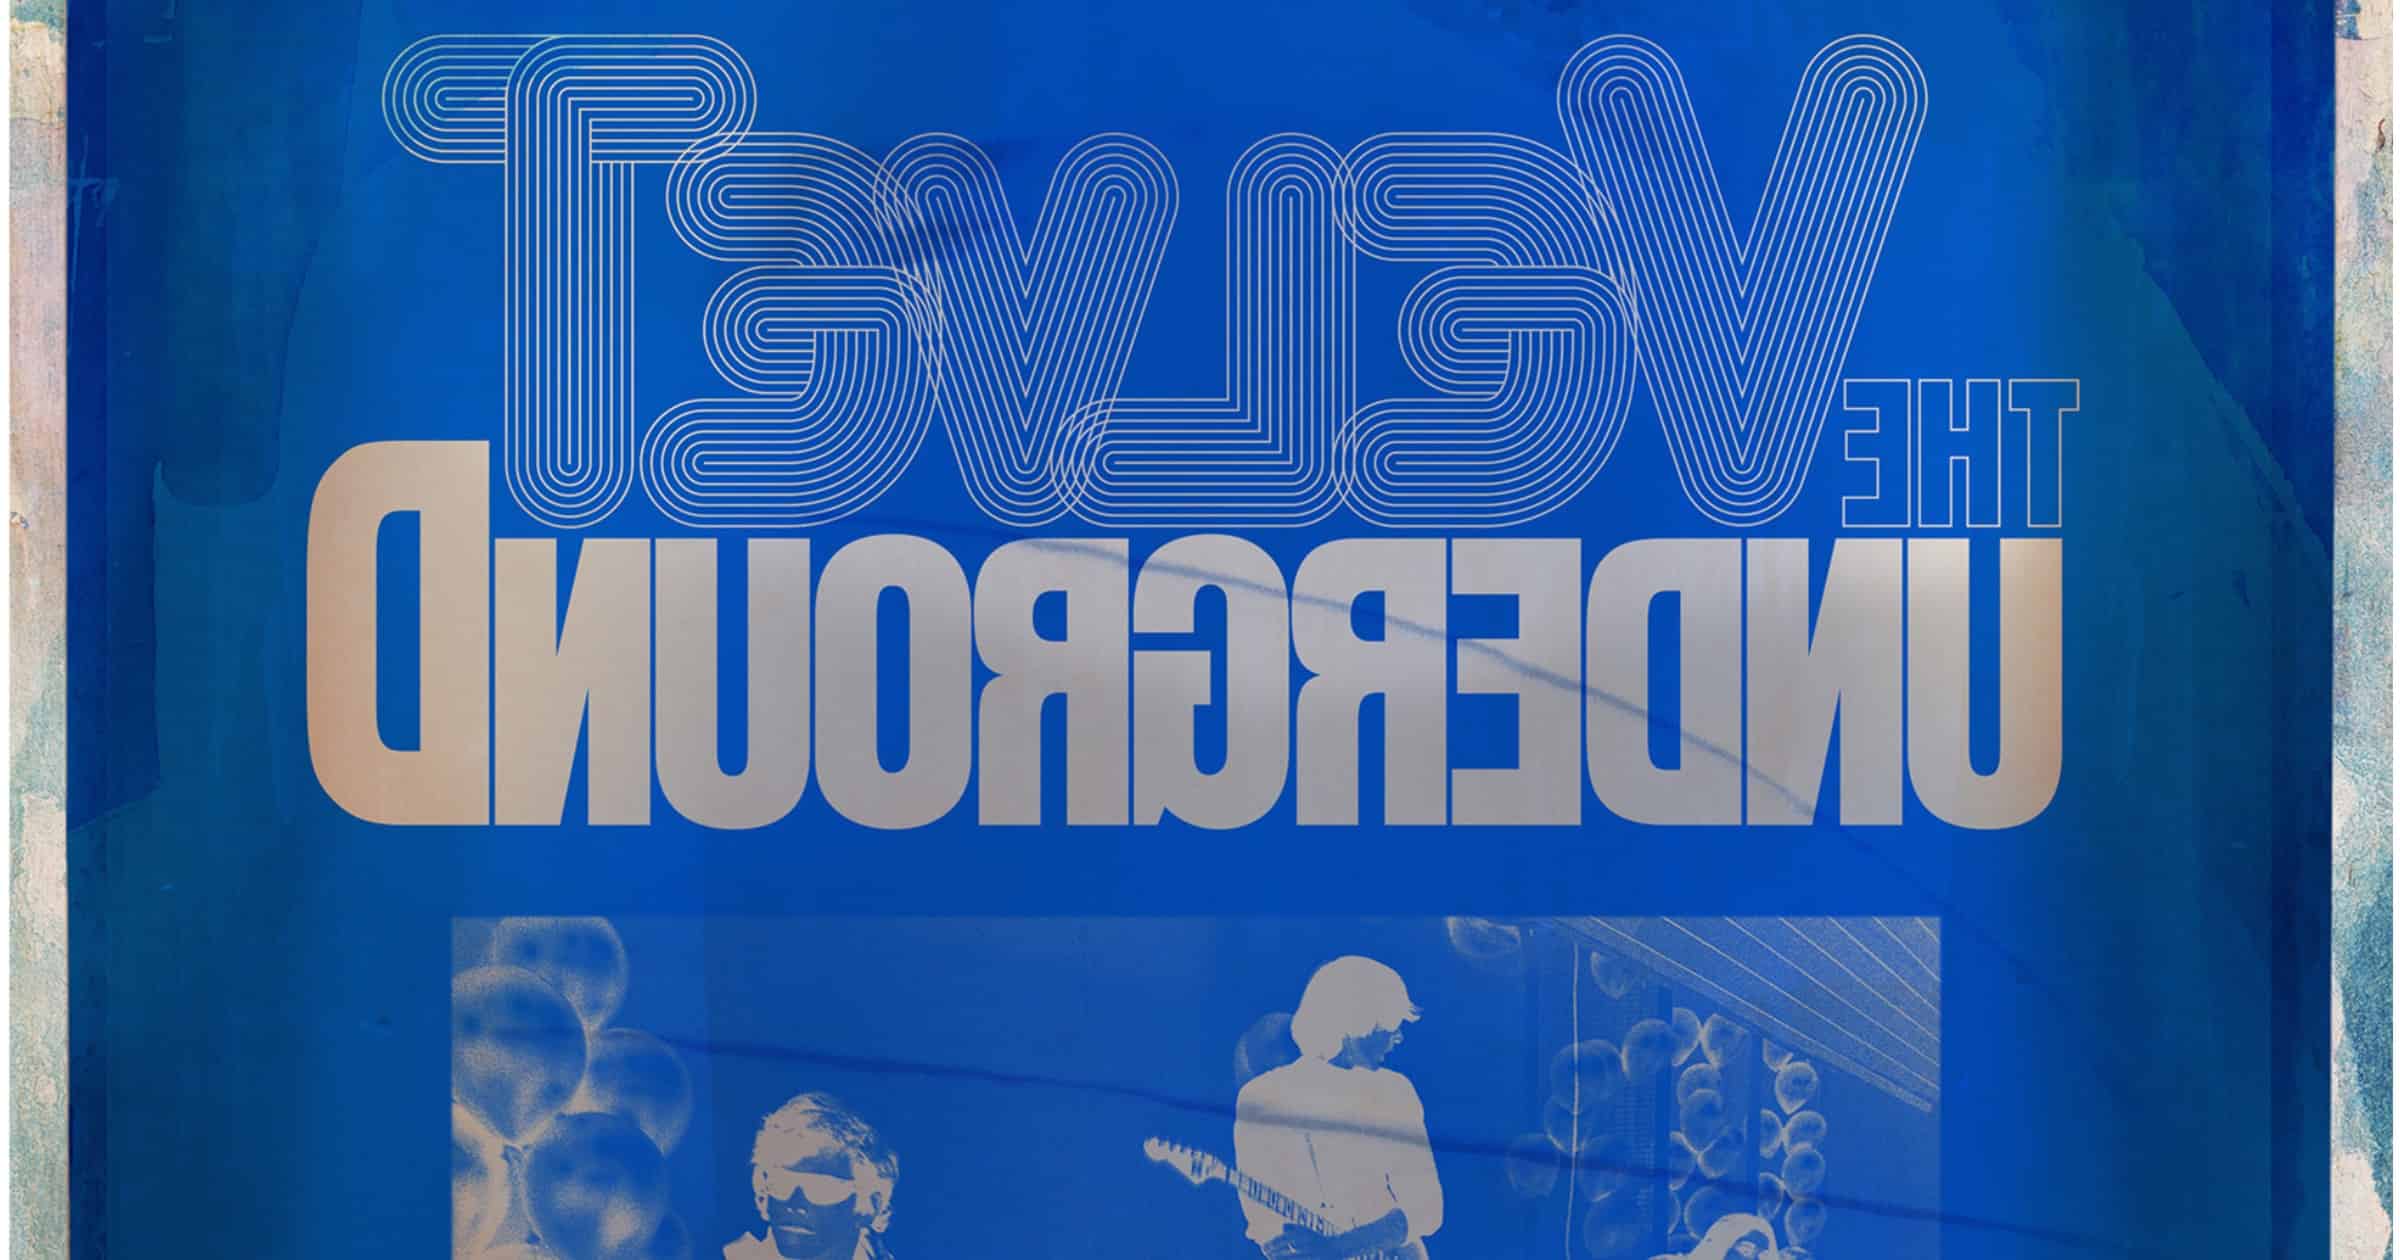 ‘The Velvet Underground’ Documentary Out Now on Apple TV+